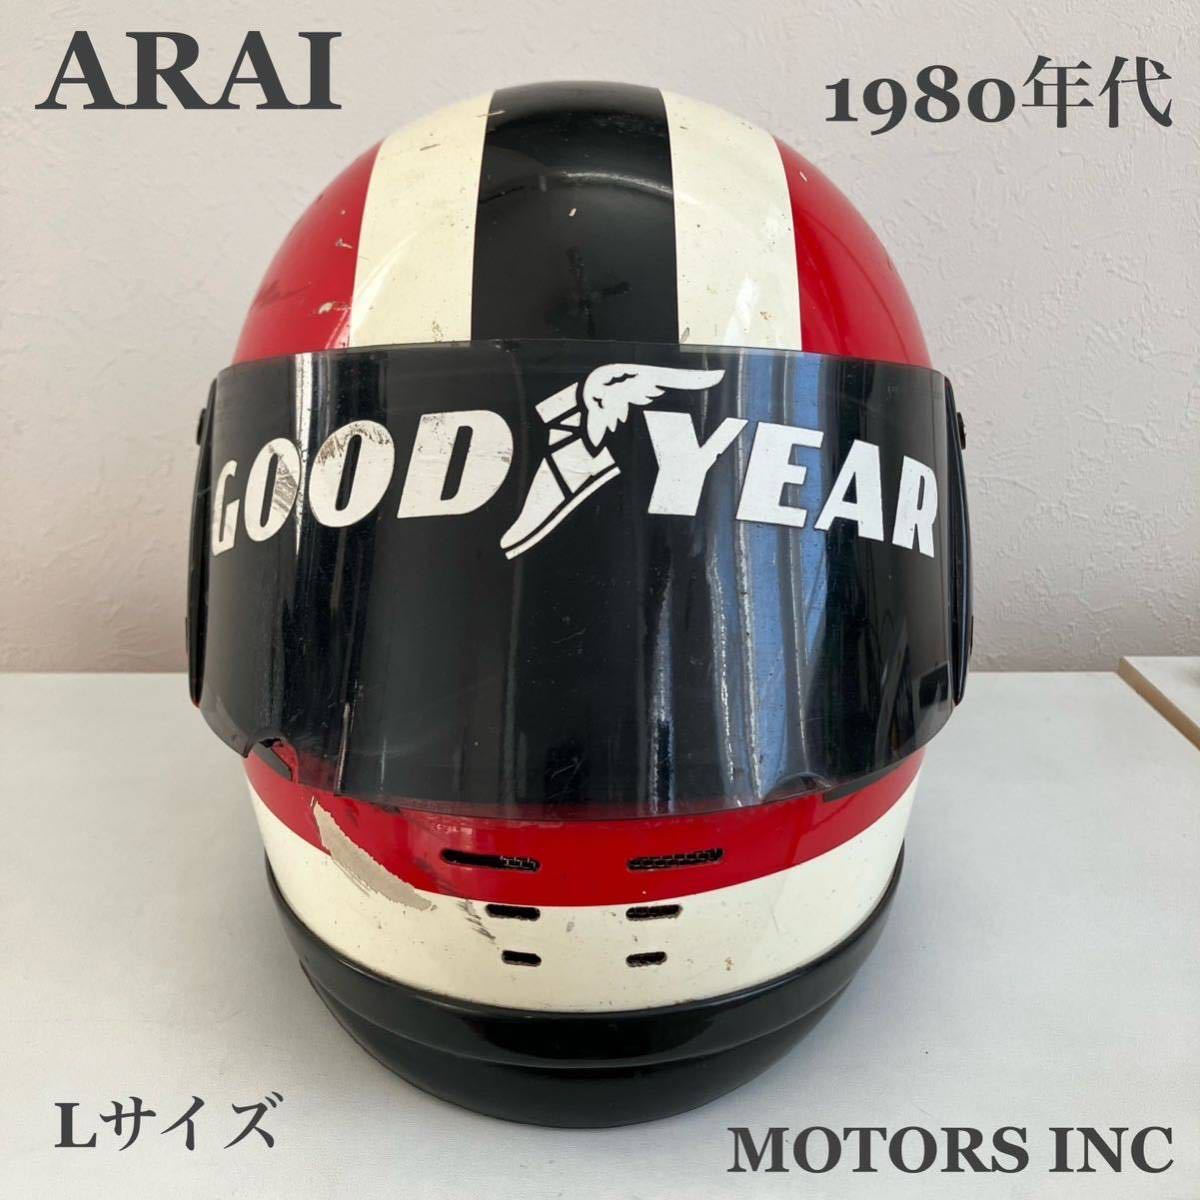 ARAI* vintage helmet L size 1984 year made rare rare old car Honda full-face red Goodyear Yamaha ARAI Arai that time thing SHOEI